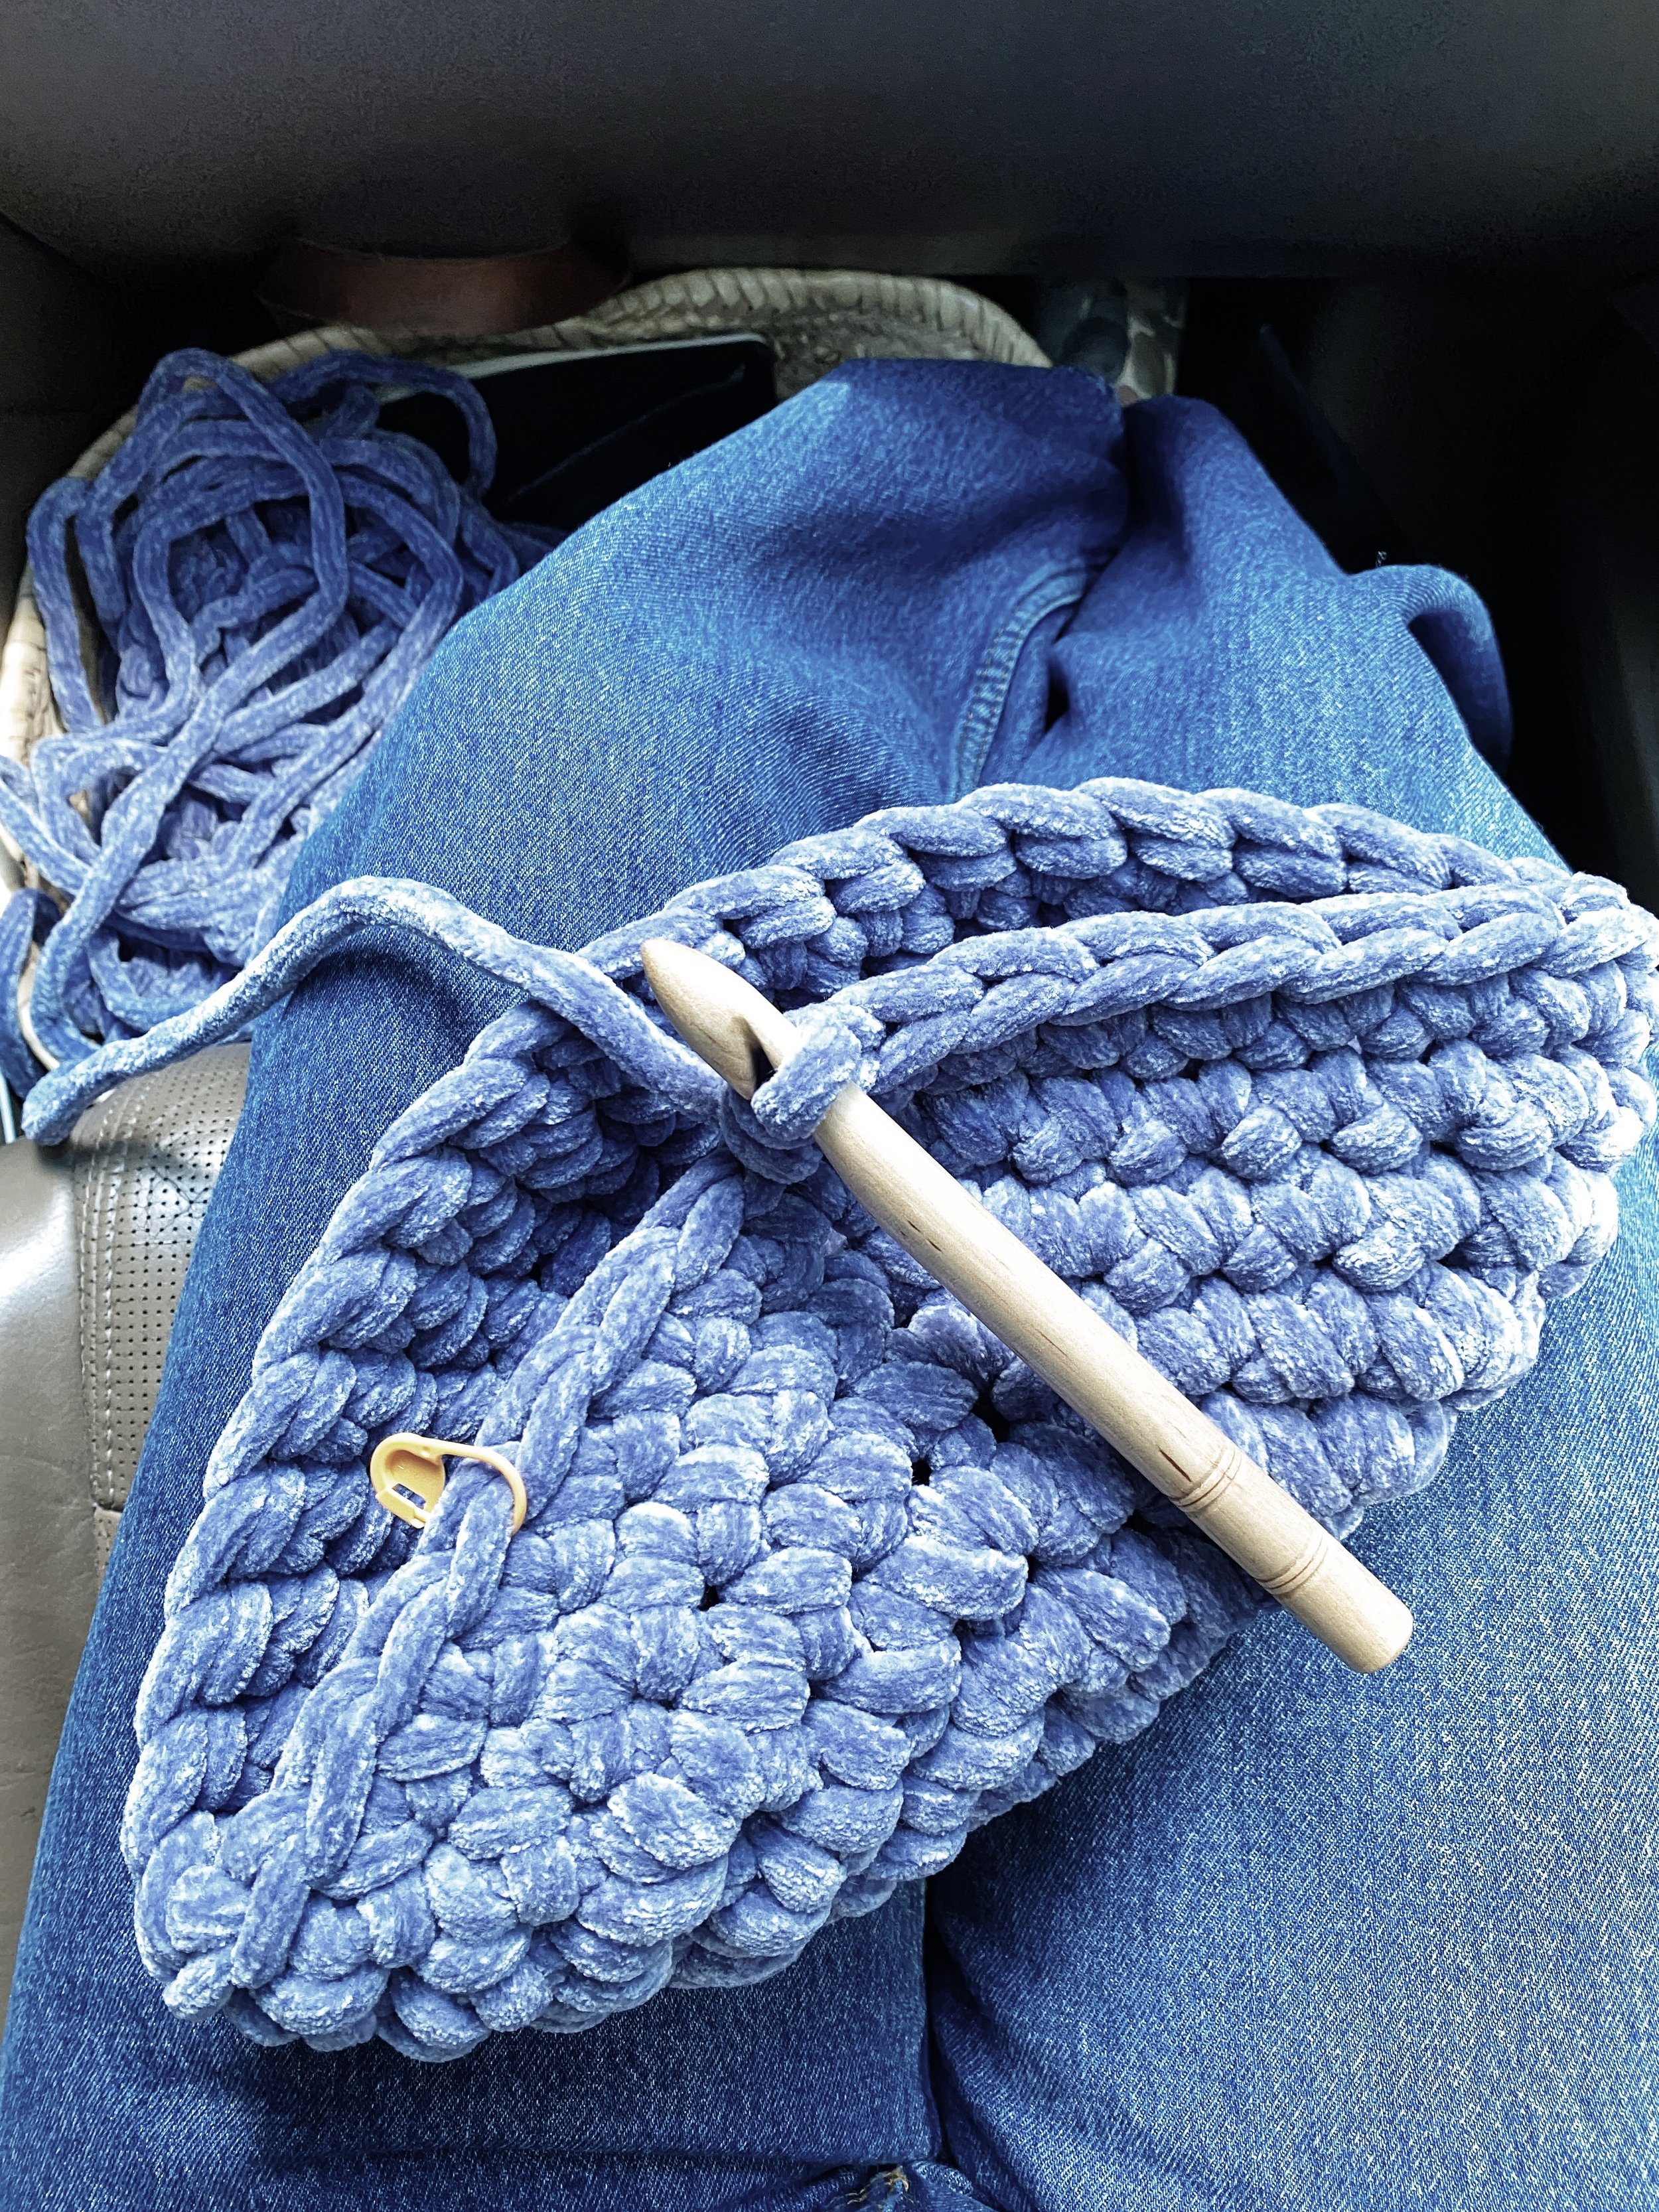 Fʀɪᴛᴢɪᴇ ᴍᴀᴅᴇ - LV Tapestry Crochet on Flat Materials: Tiny